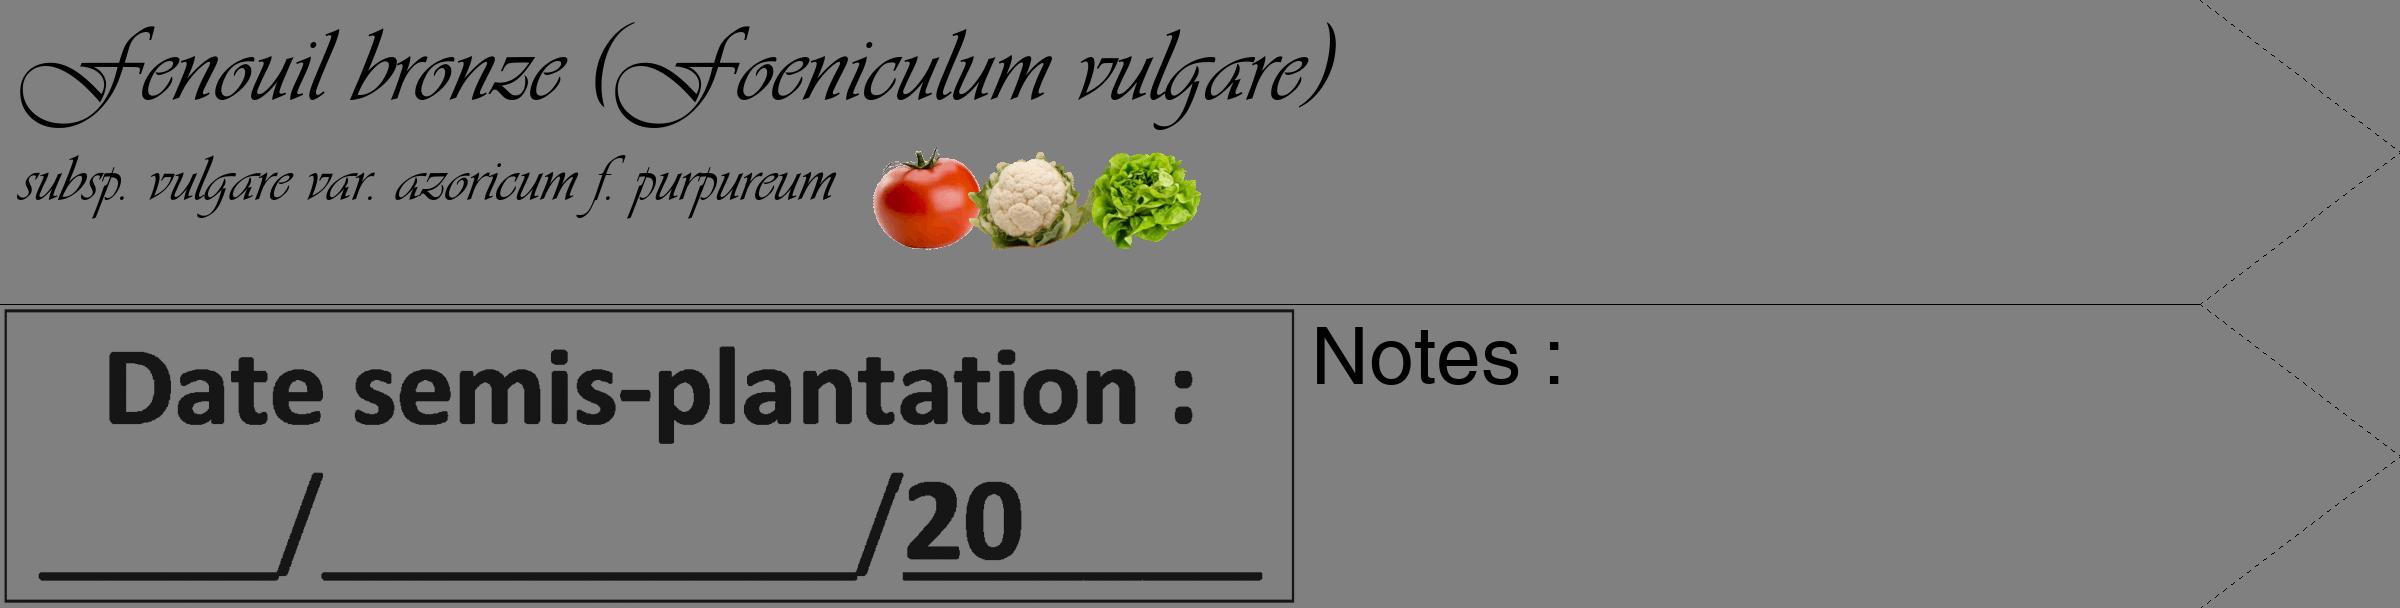 Étiquette de : Foeniculum vulgare subsp. vulgare var. azoricum f. purpureum - format c - style noire57_simple_simpleviv avec comestibilité simplifiée